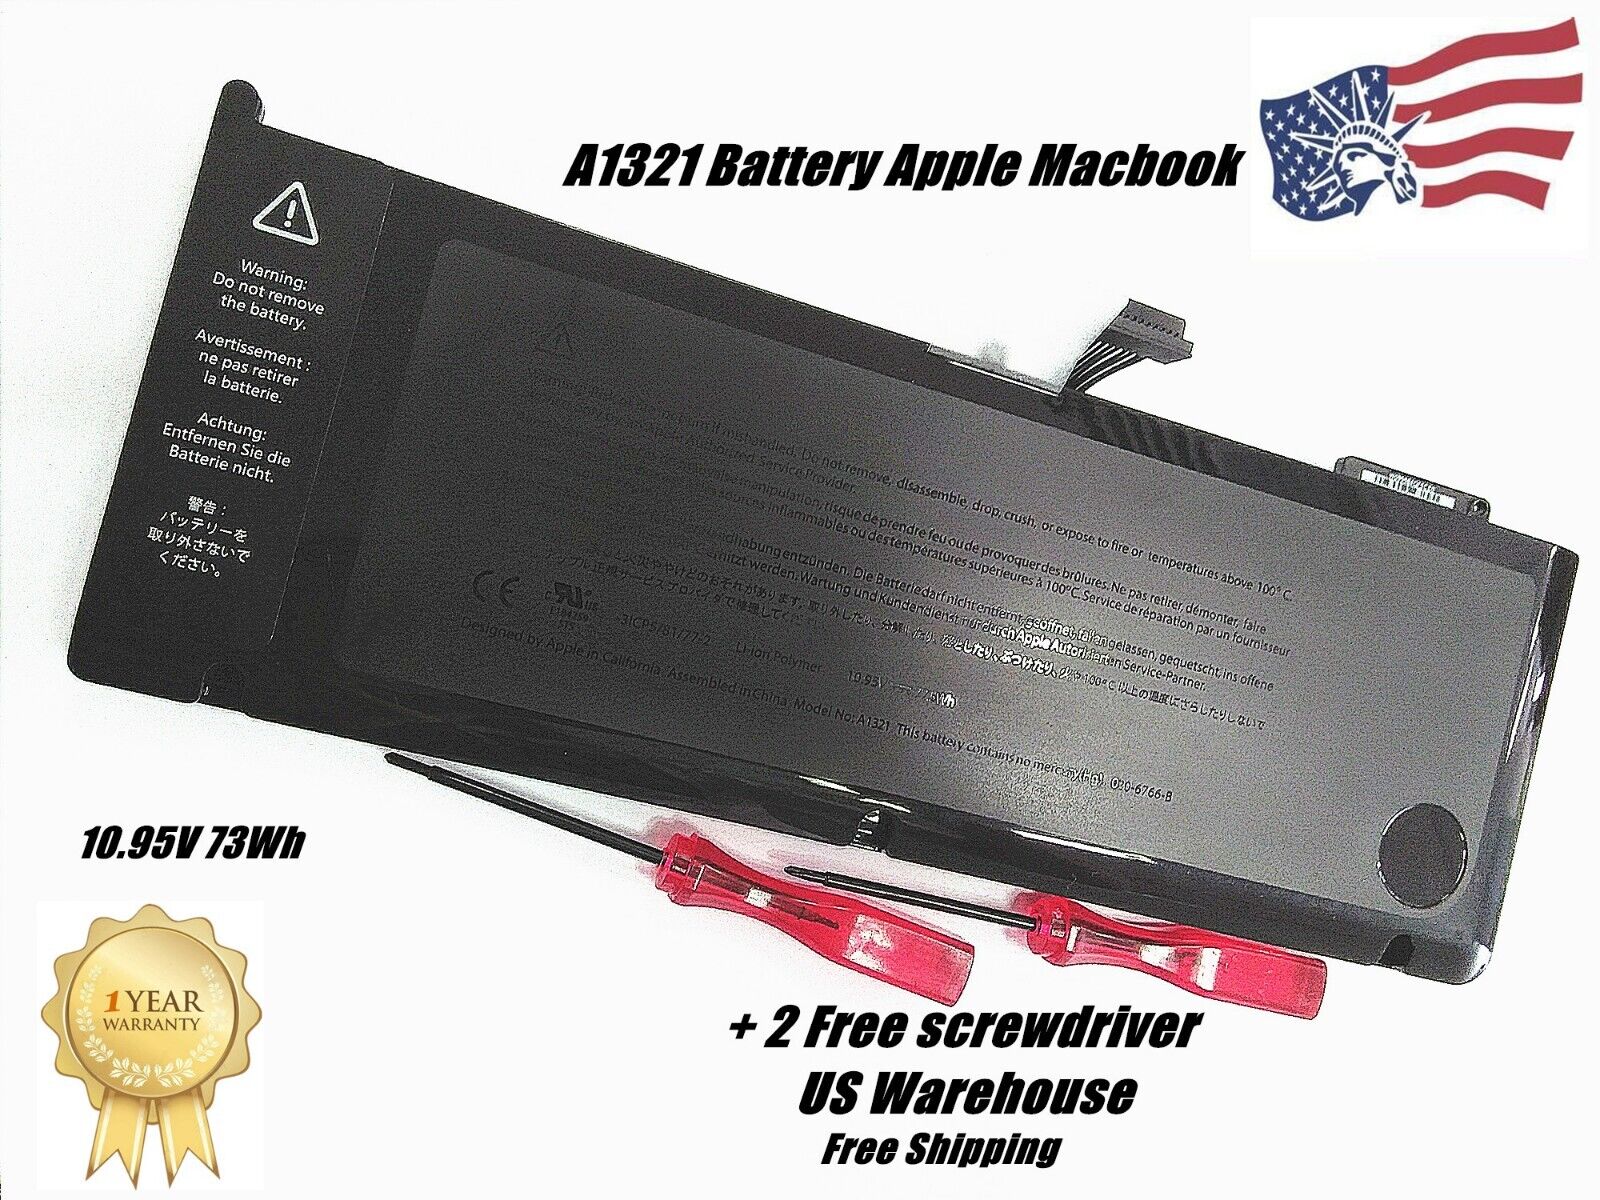 Genuin OEM A1321 Battery for Apple Macbook Pro 15